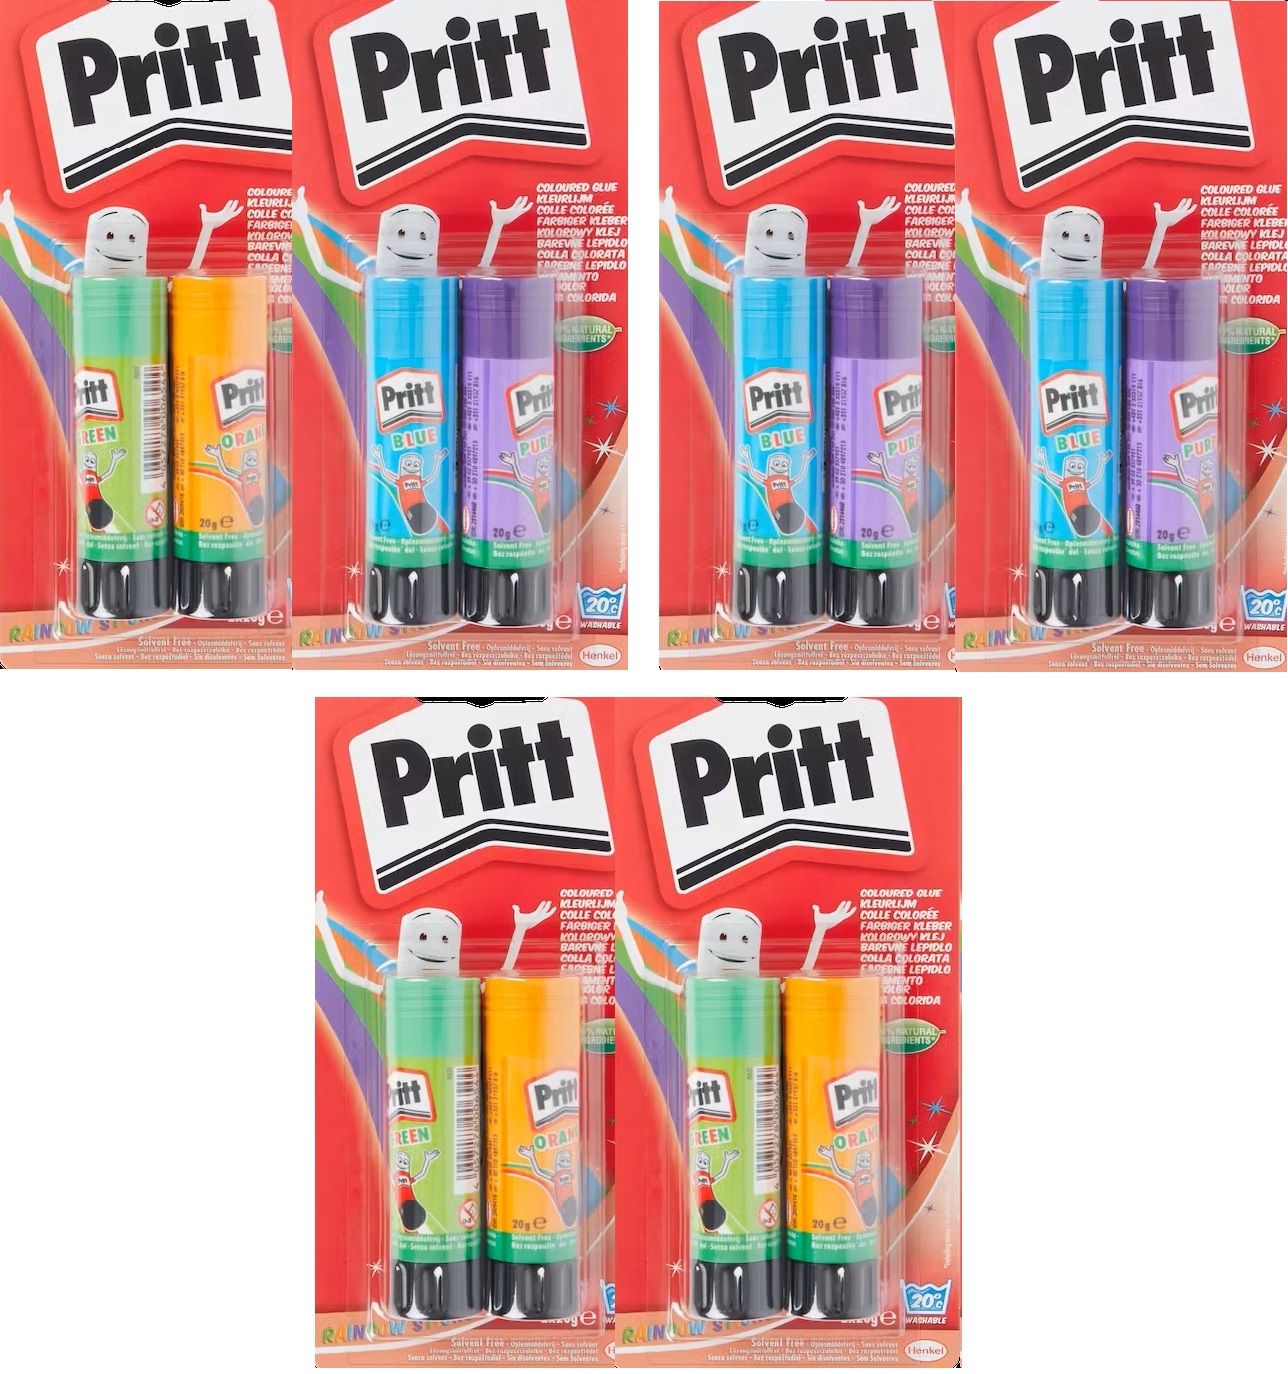 Pritt Rainbow Klebestifte, 4 Stück je 20g, Farblich sortiert! - Pritt Sticks Coloured Glue